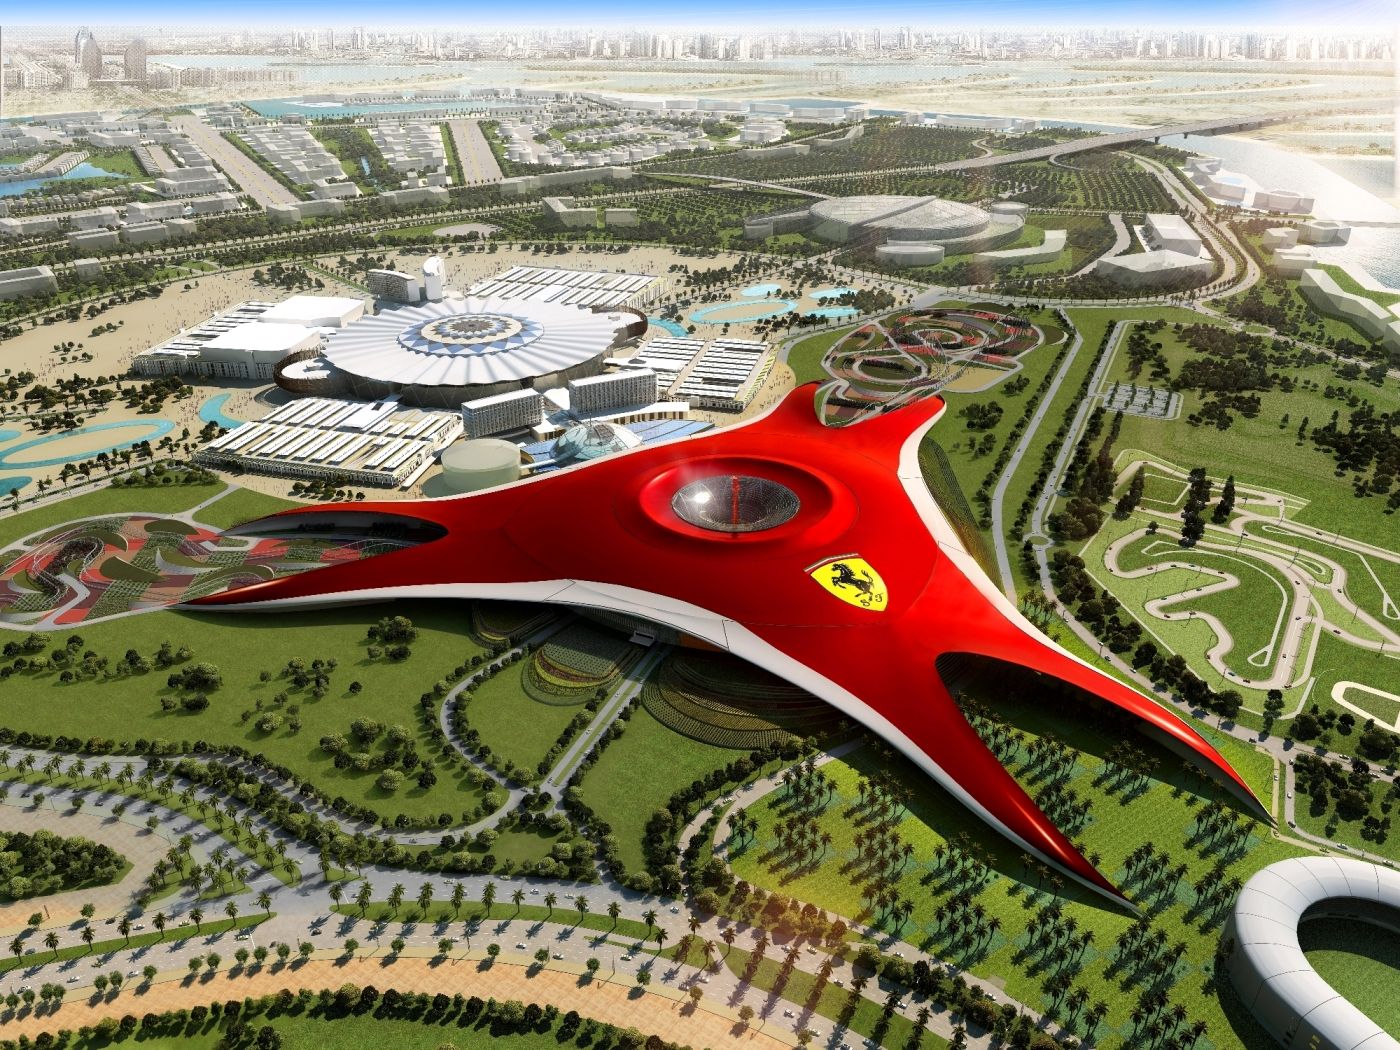 Ferrari World Abu Dhabi. Ferrari world, Ferrari world abu dhabi, Abu dhabi